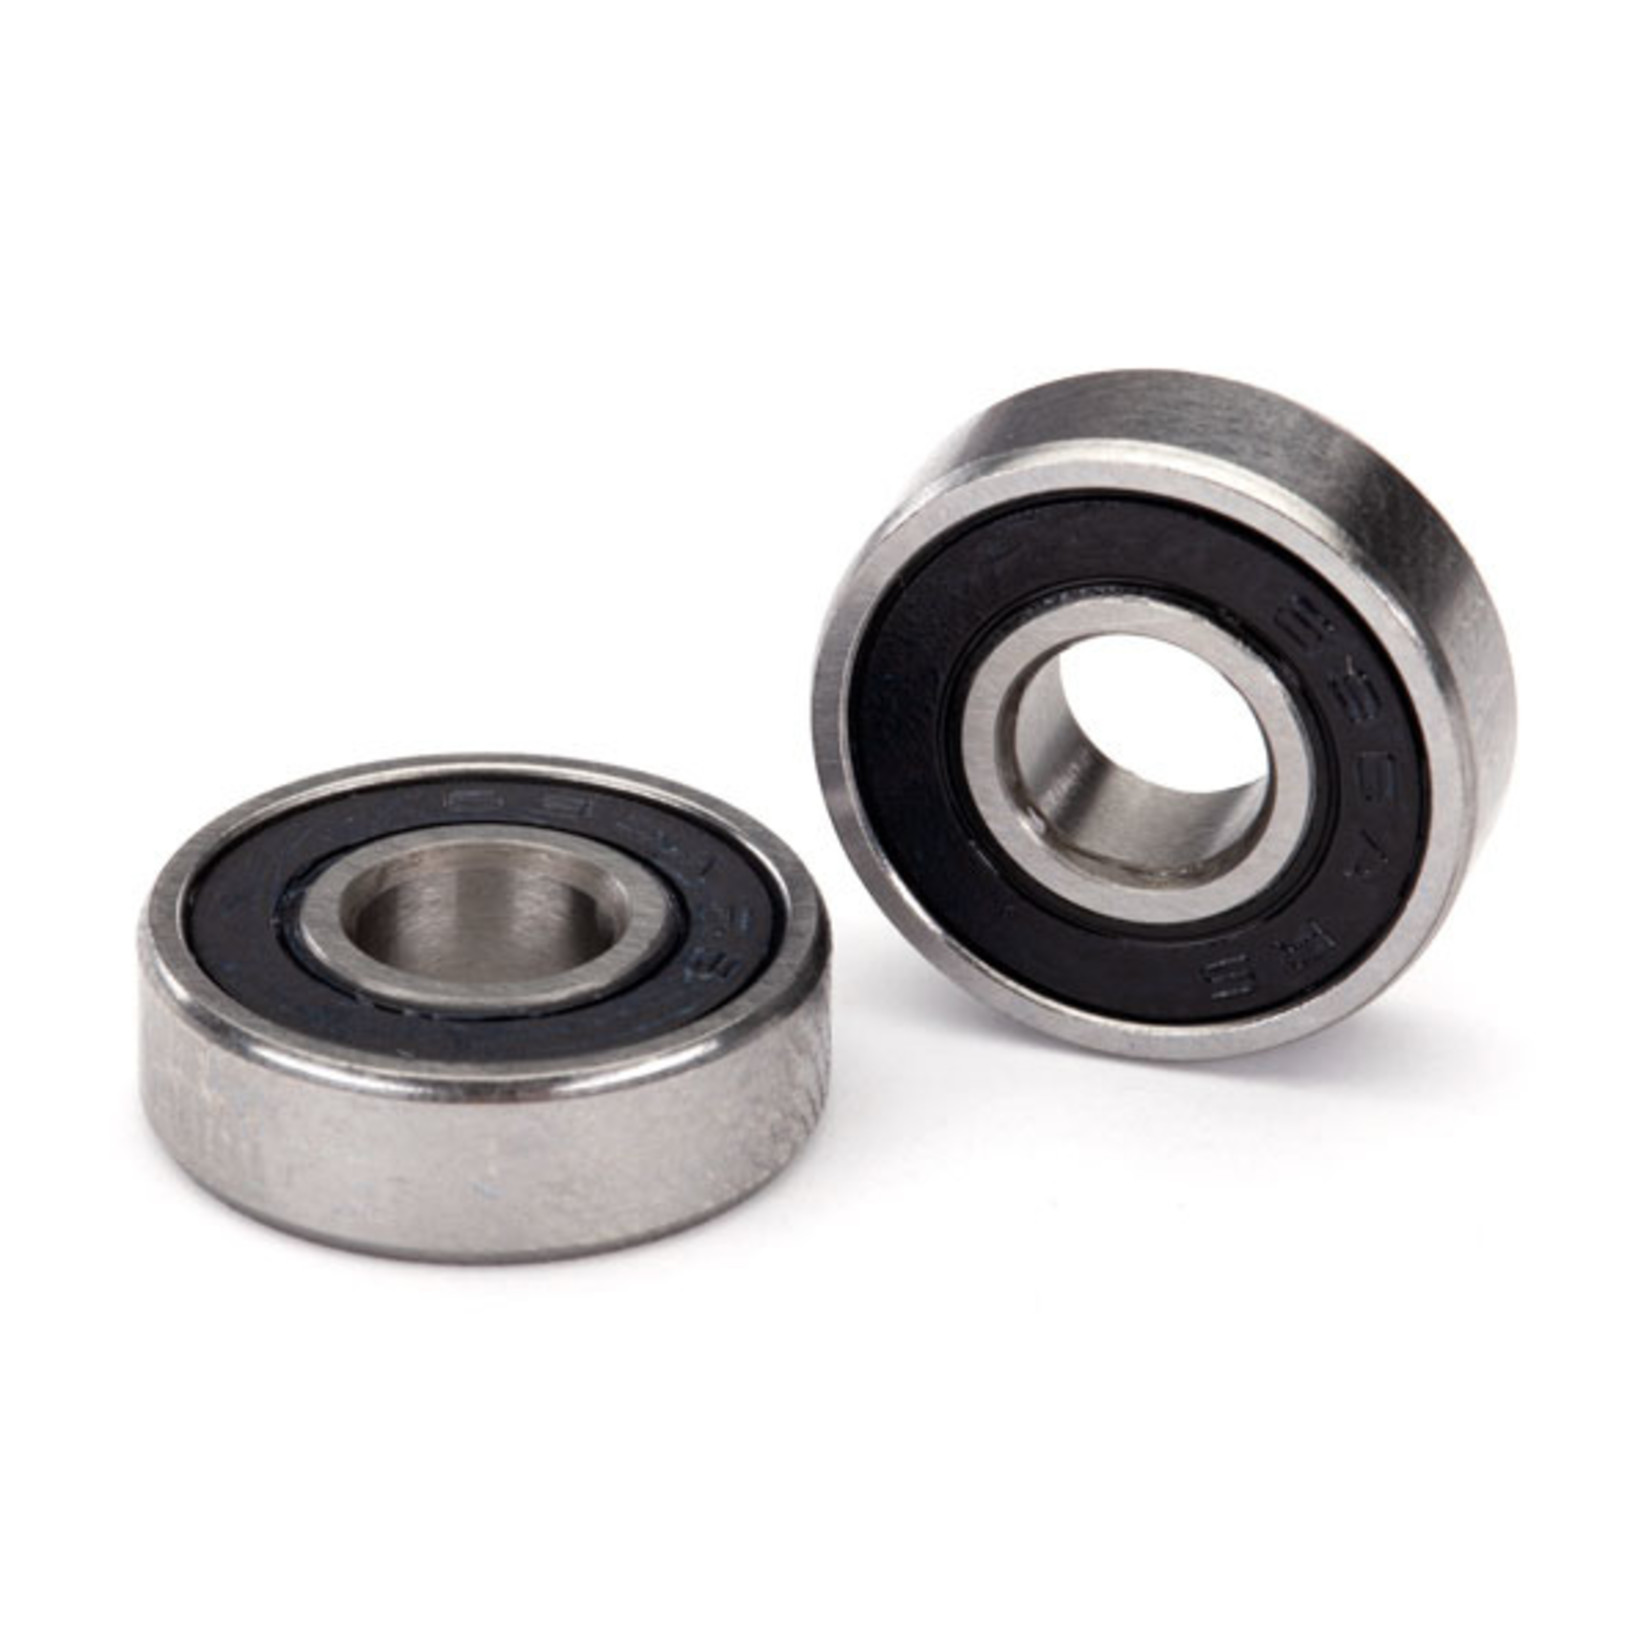 Traxxas 5099A - Ball bearing, black rubber sealed (6x16x5mm) (2